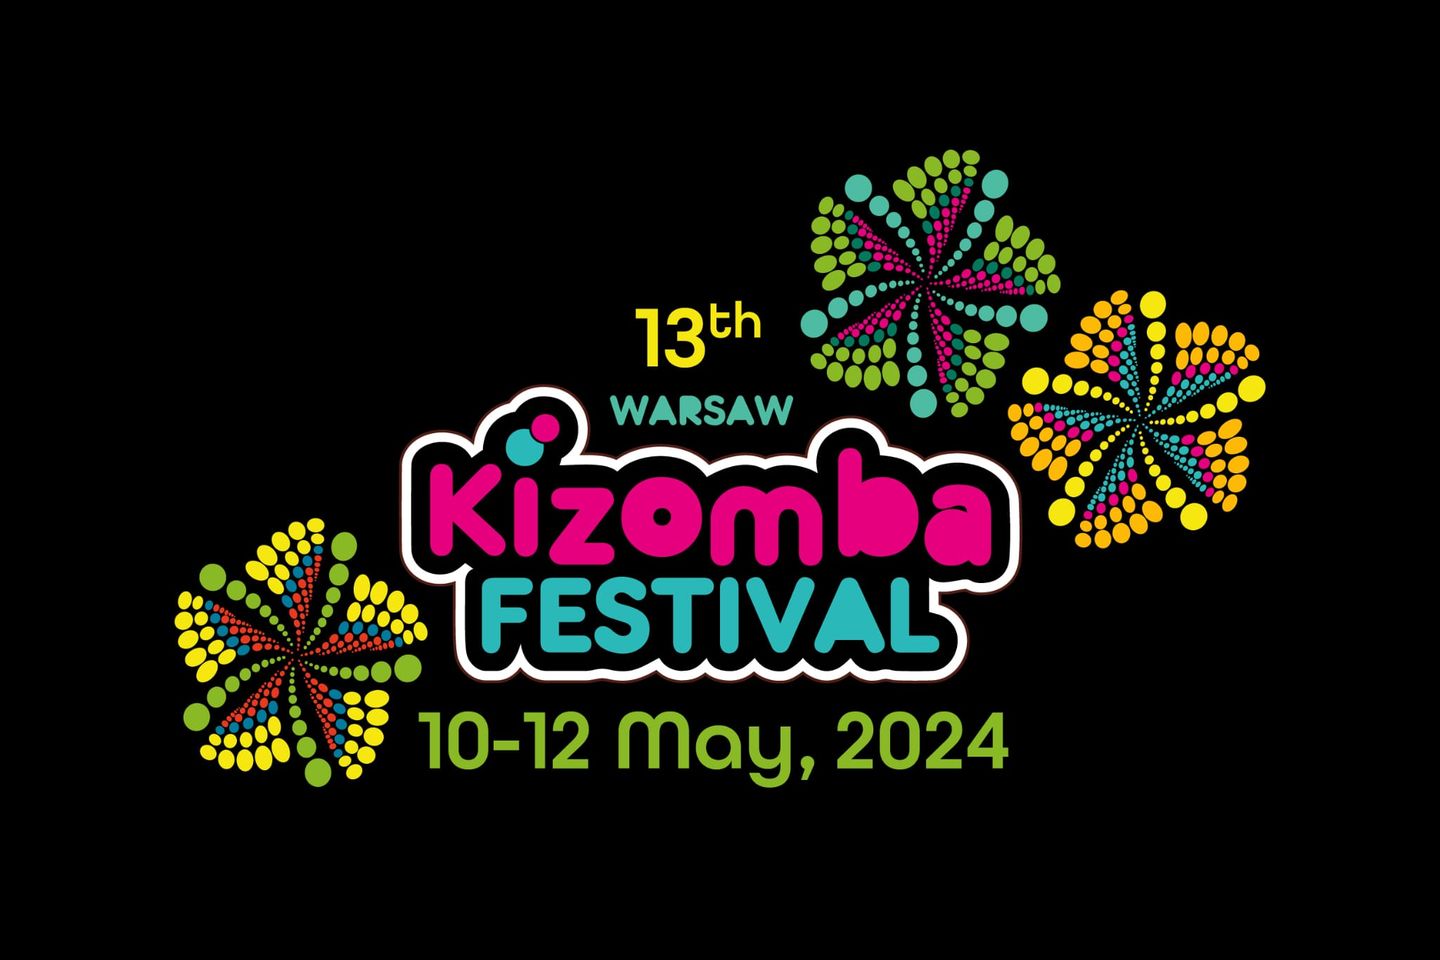 Warsaw Kizomba Festival 13th WKF 2024 